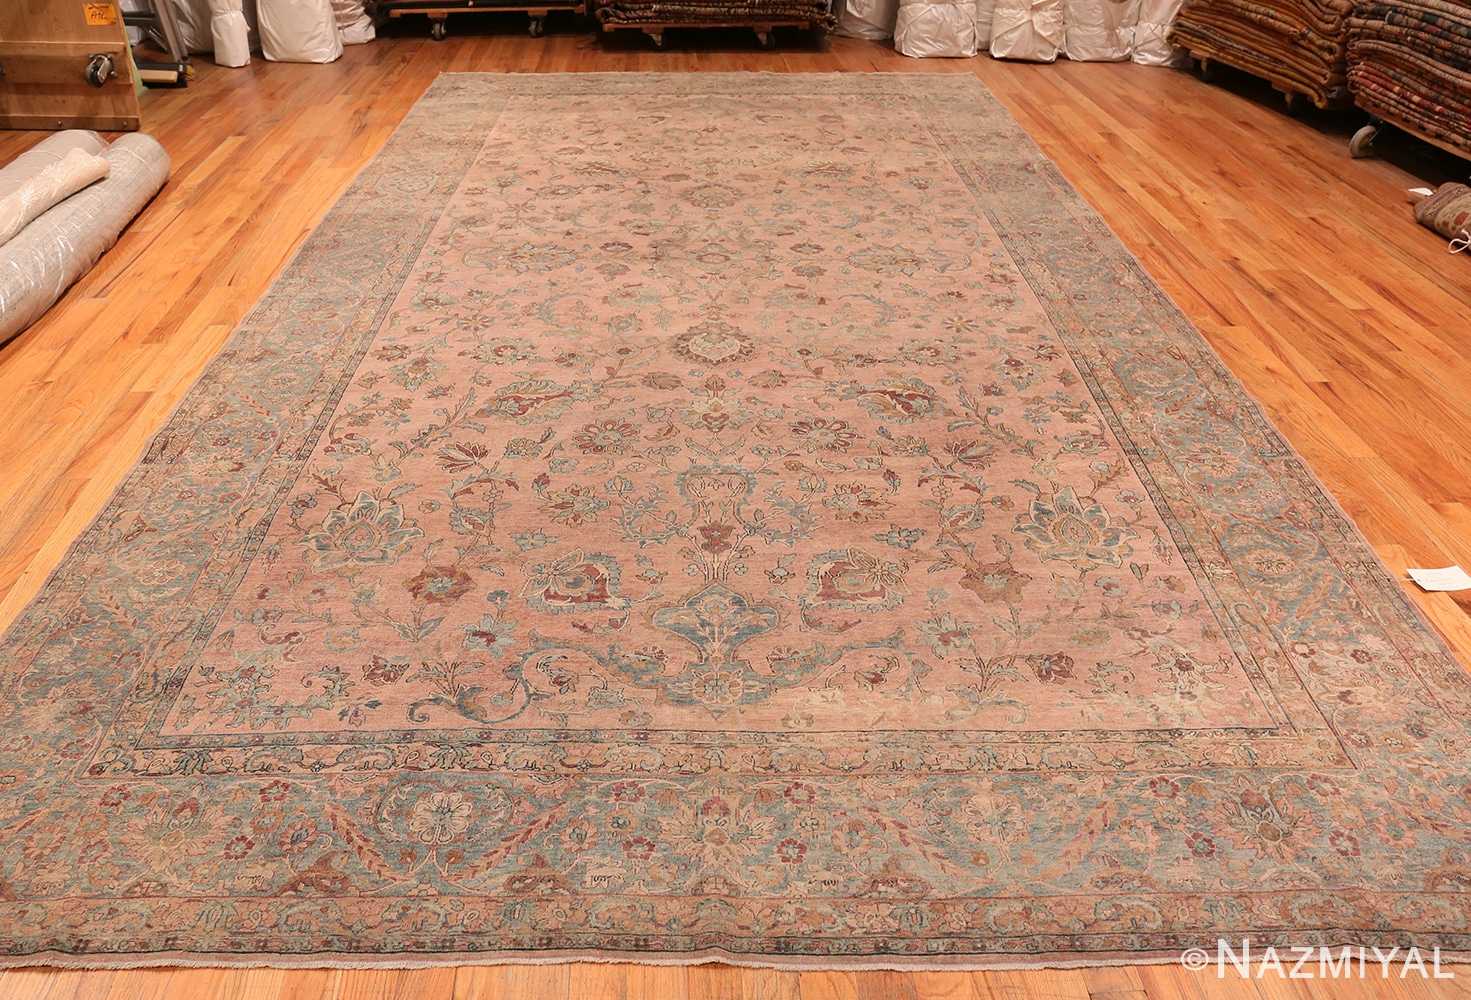 Whole View Of Large Antique Persian Kerman Rug 49926 by Nazmiyal NYC